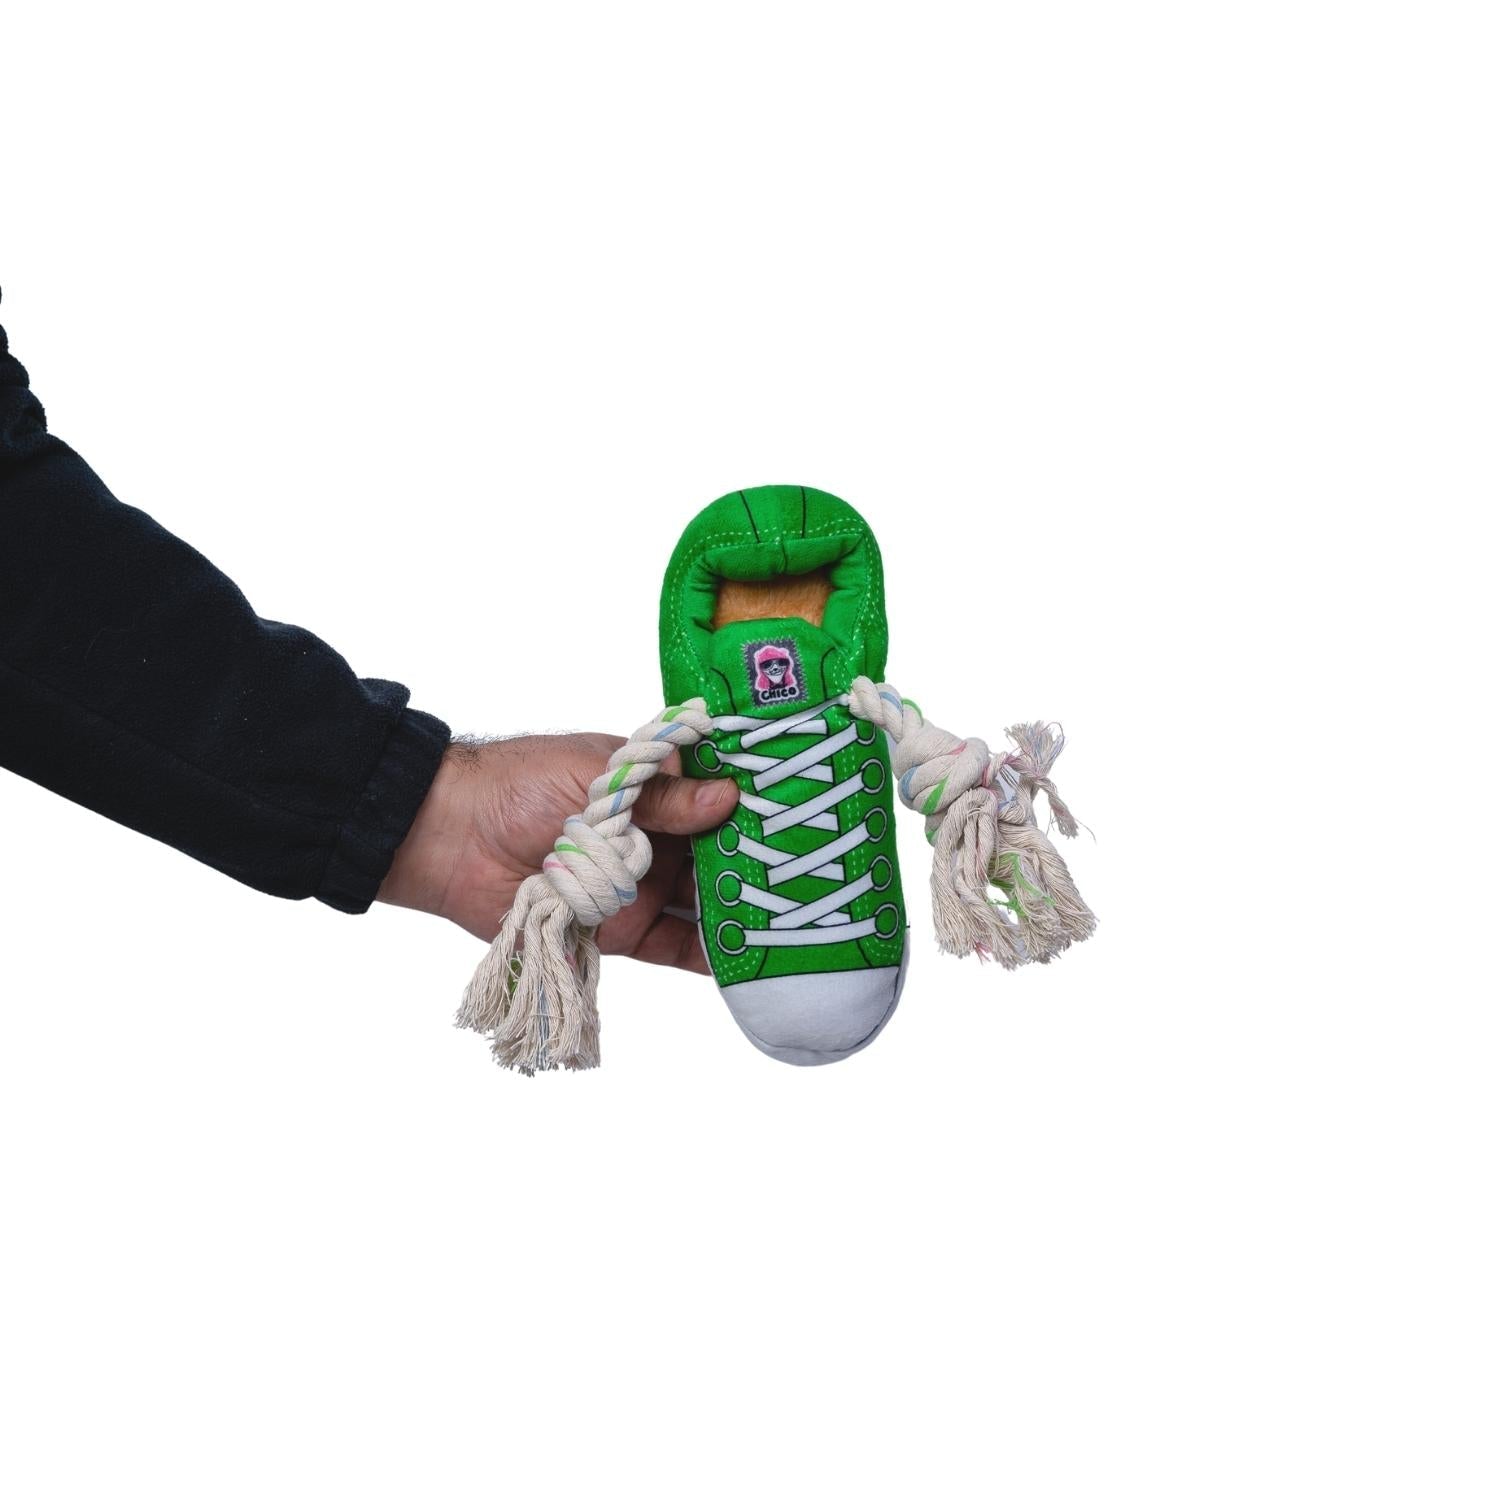 Squeaking Comfort Plush Sneaker Dog Toy - Green-1